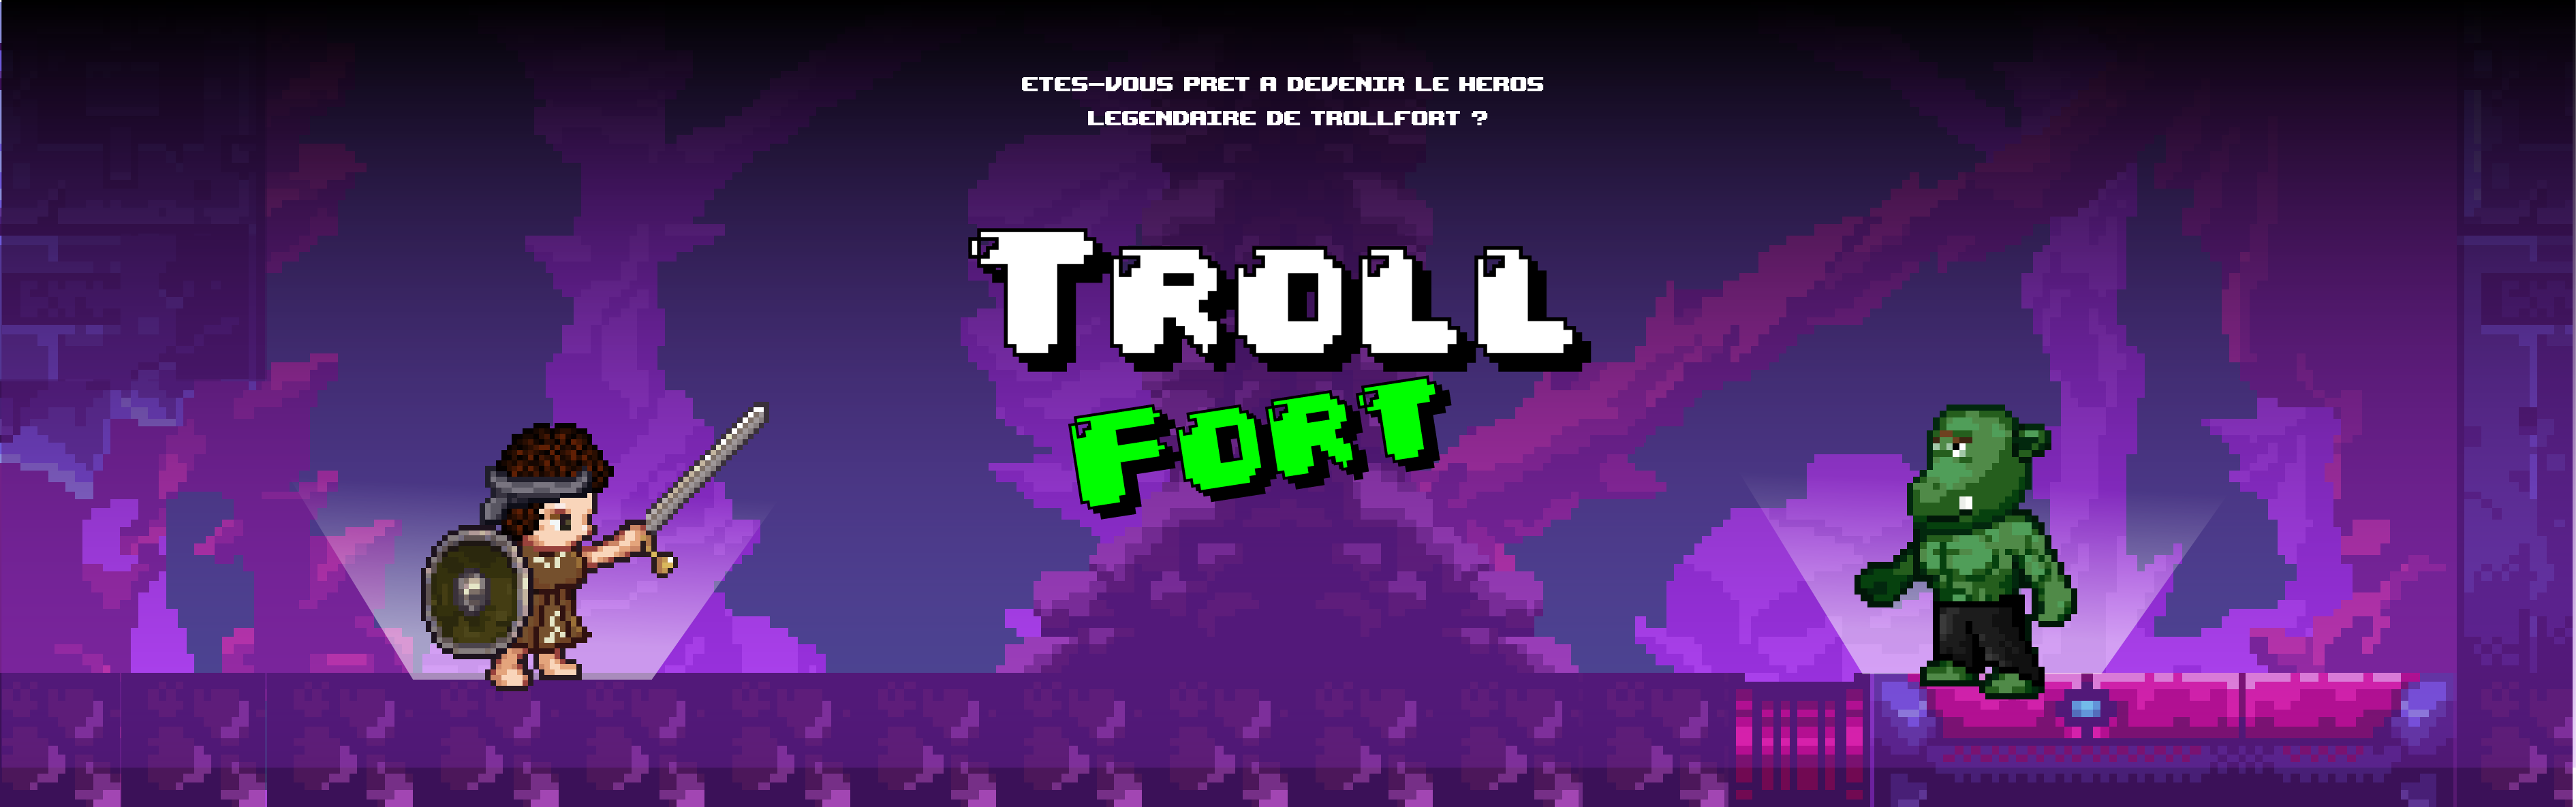 Trollfort